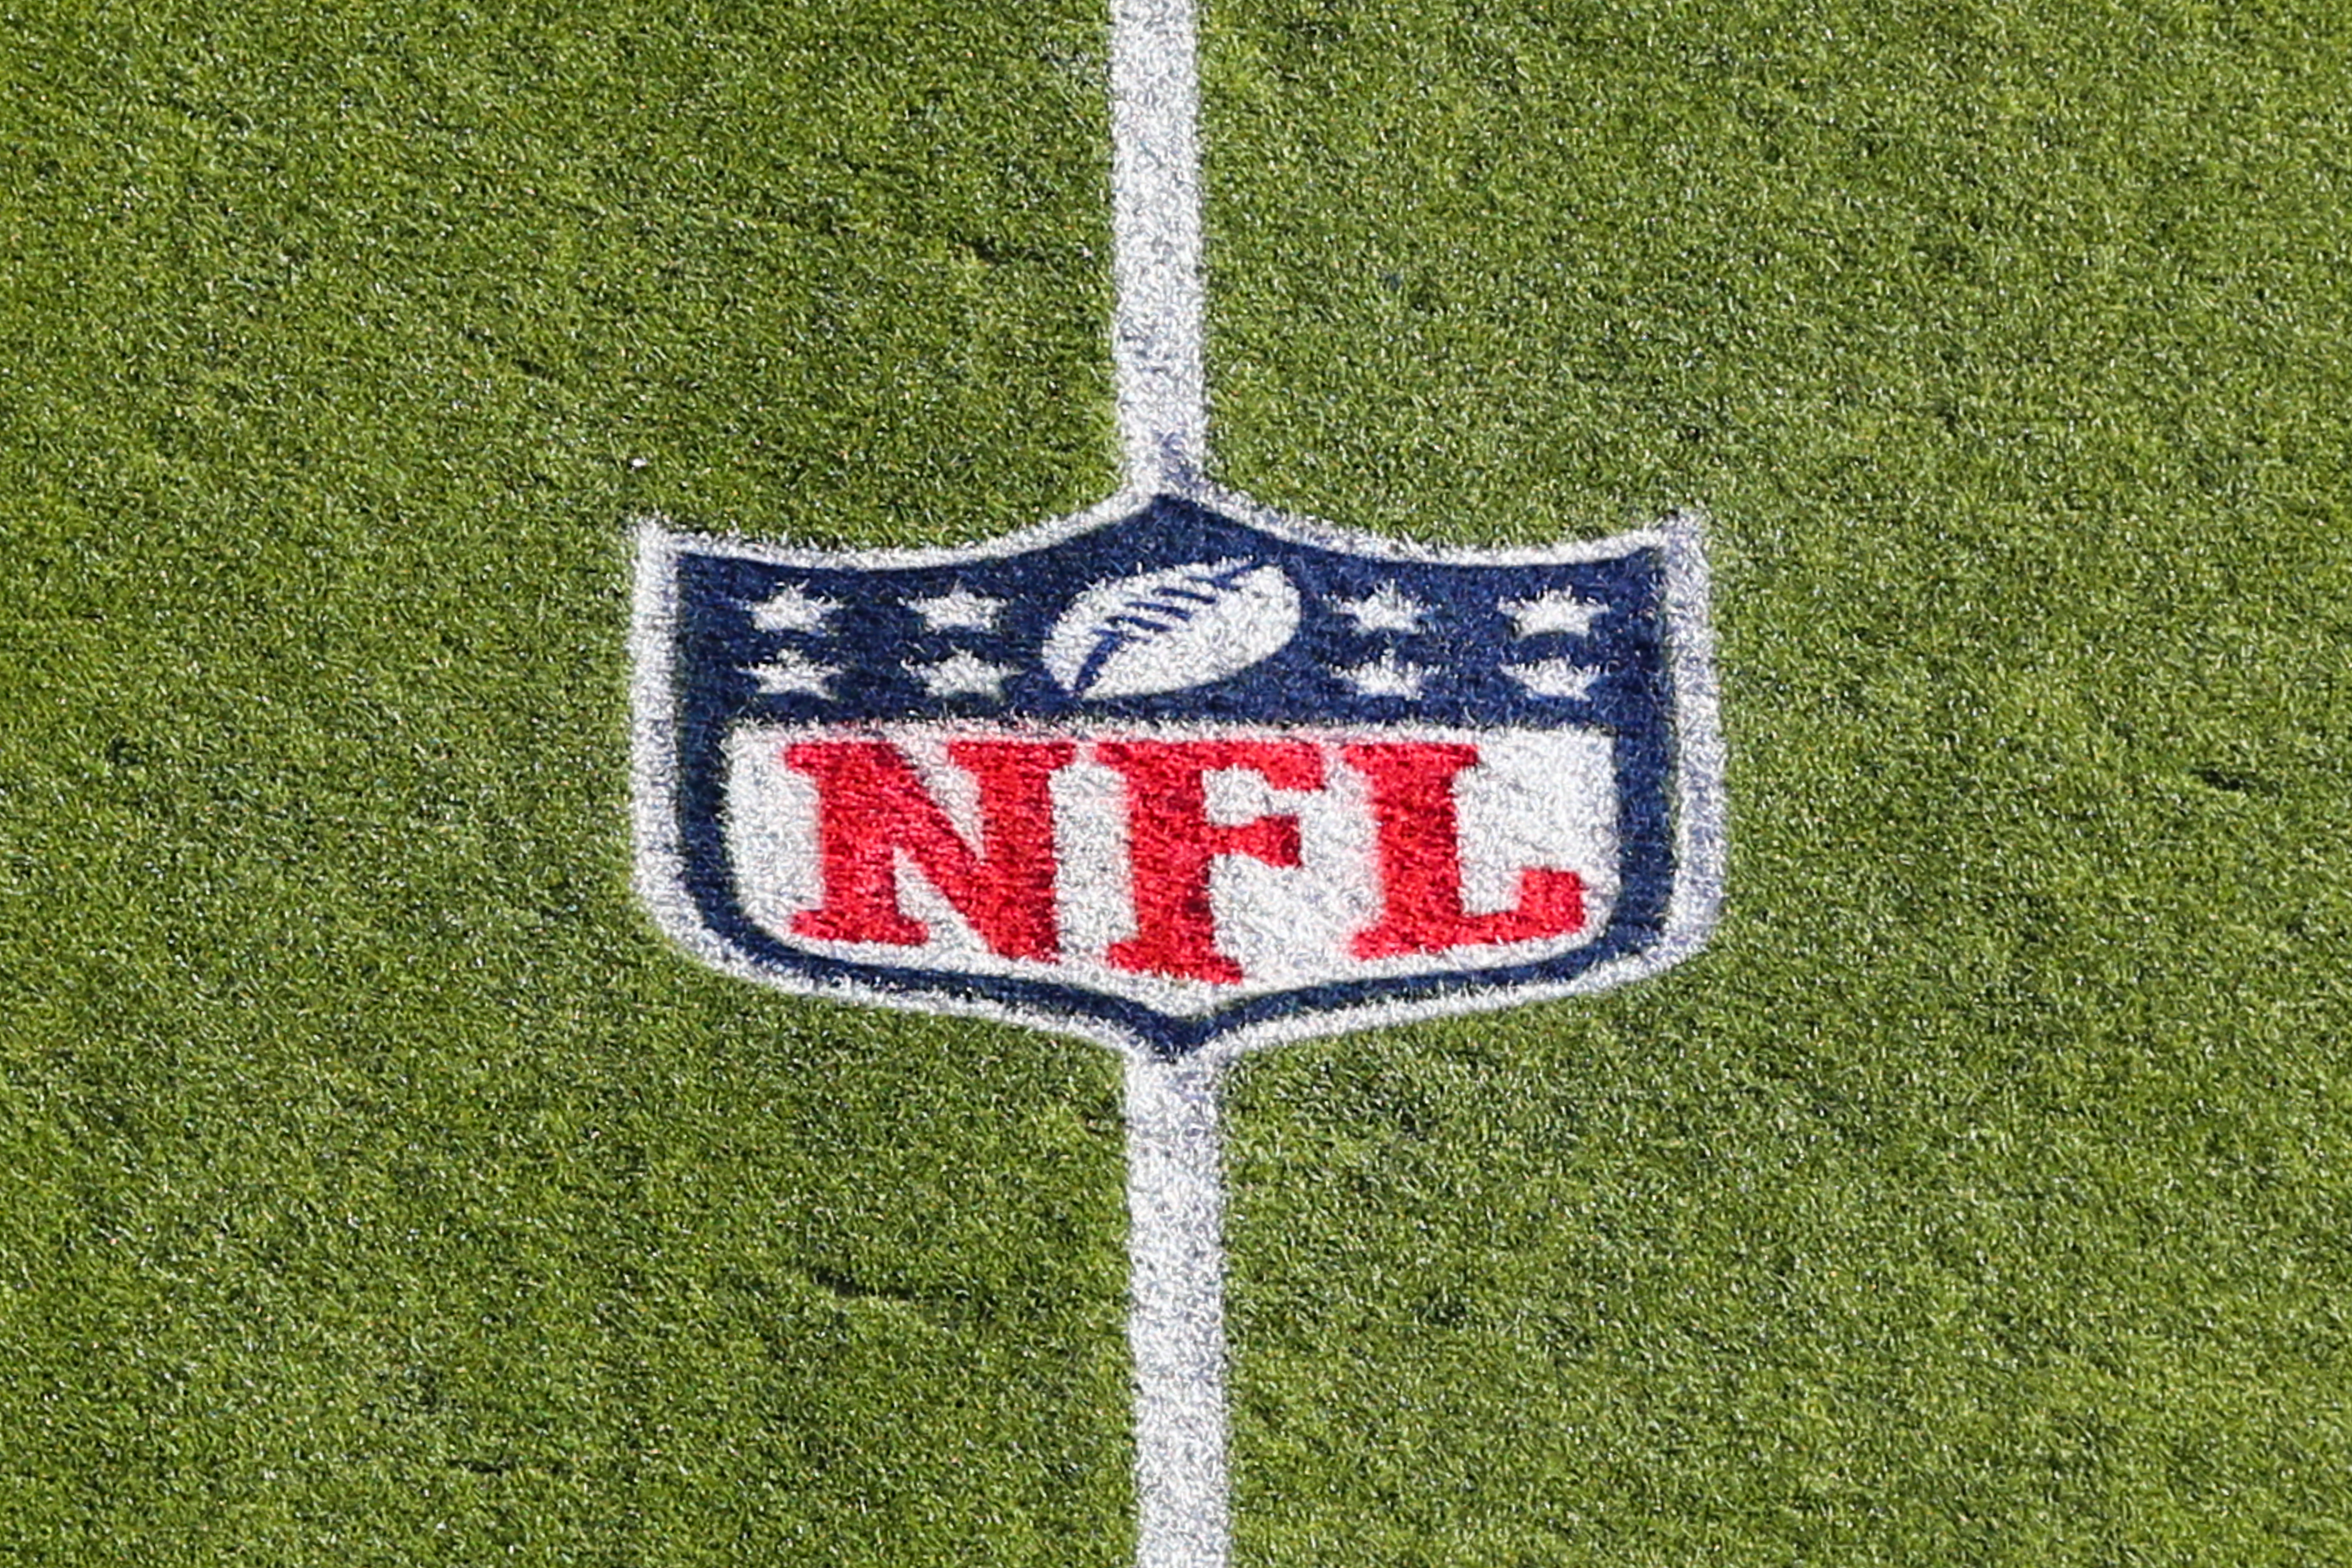 NFL: DEC 12 Raiders at Chiefs